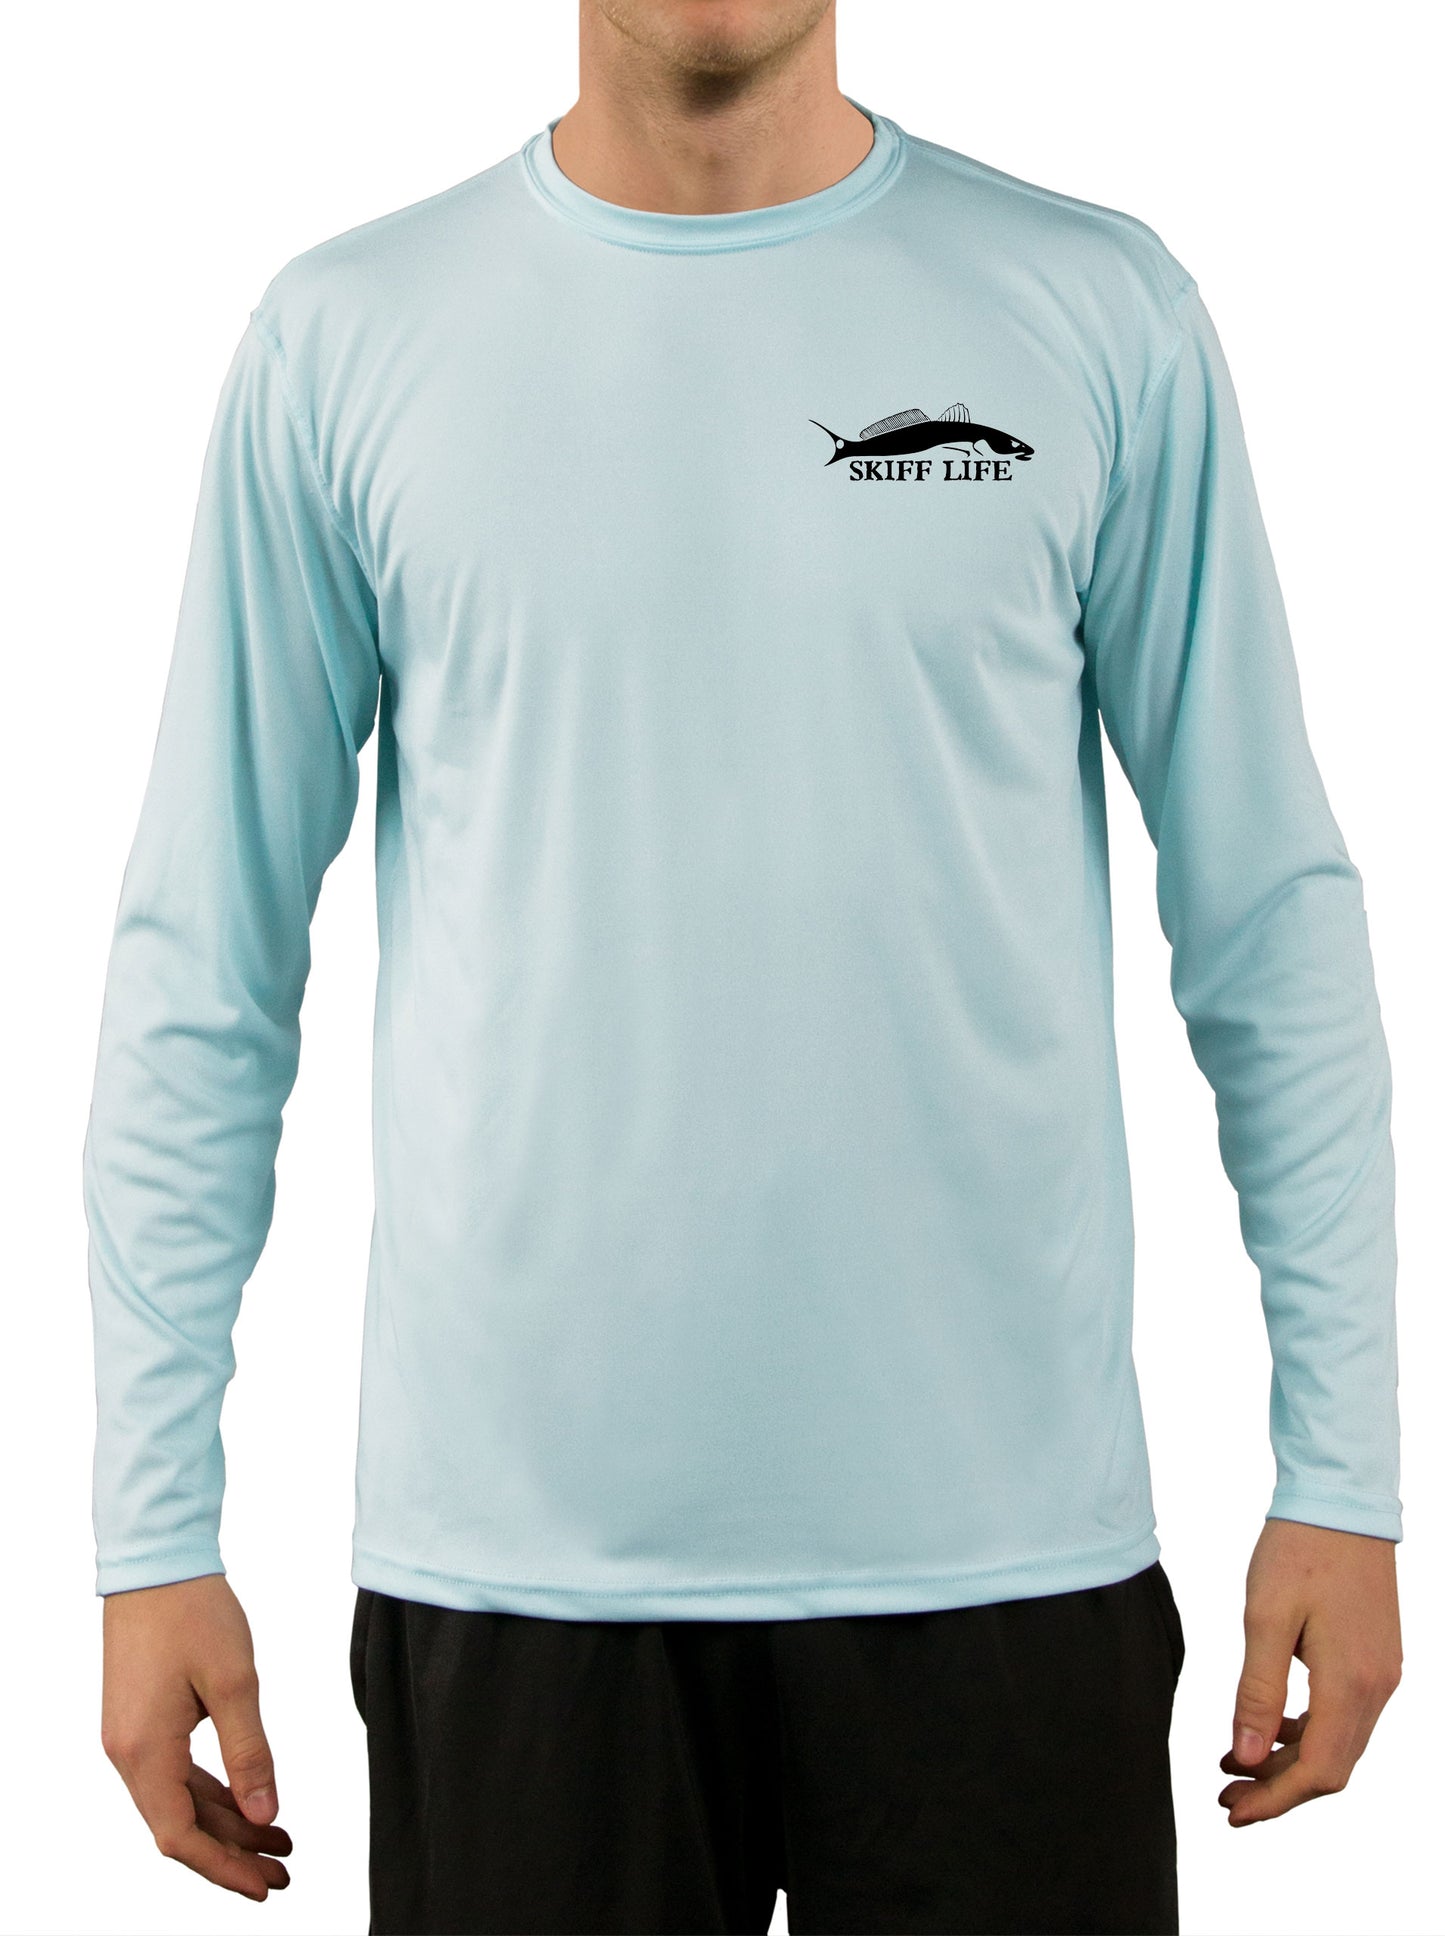 Men's Fishing Shirt Quick-Drying Breathable Summer Fishing T-Shirt